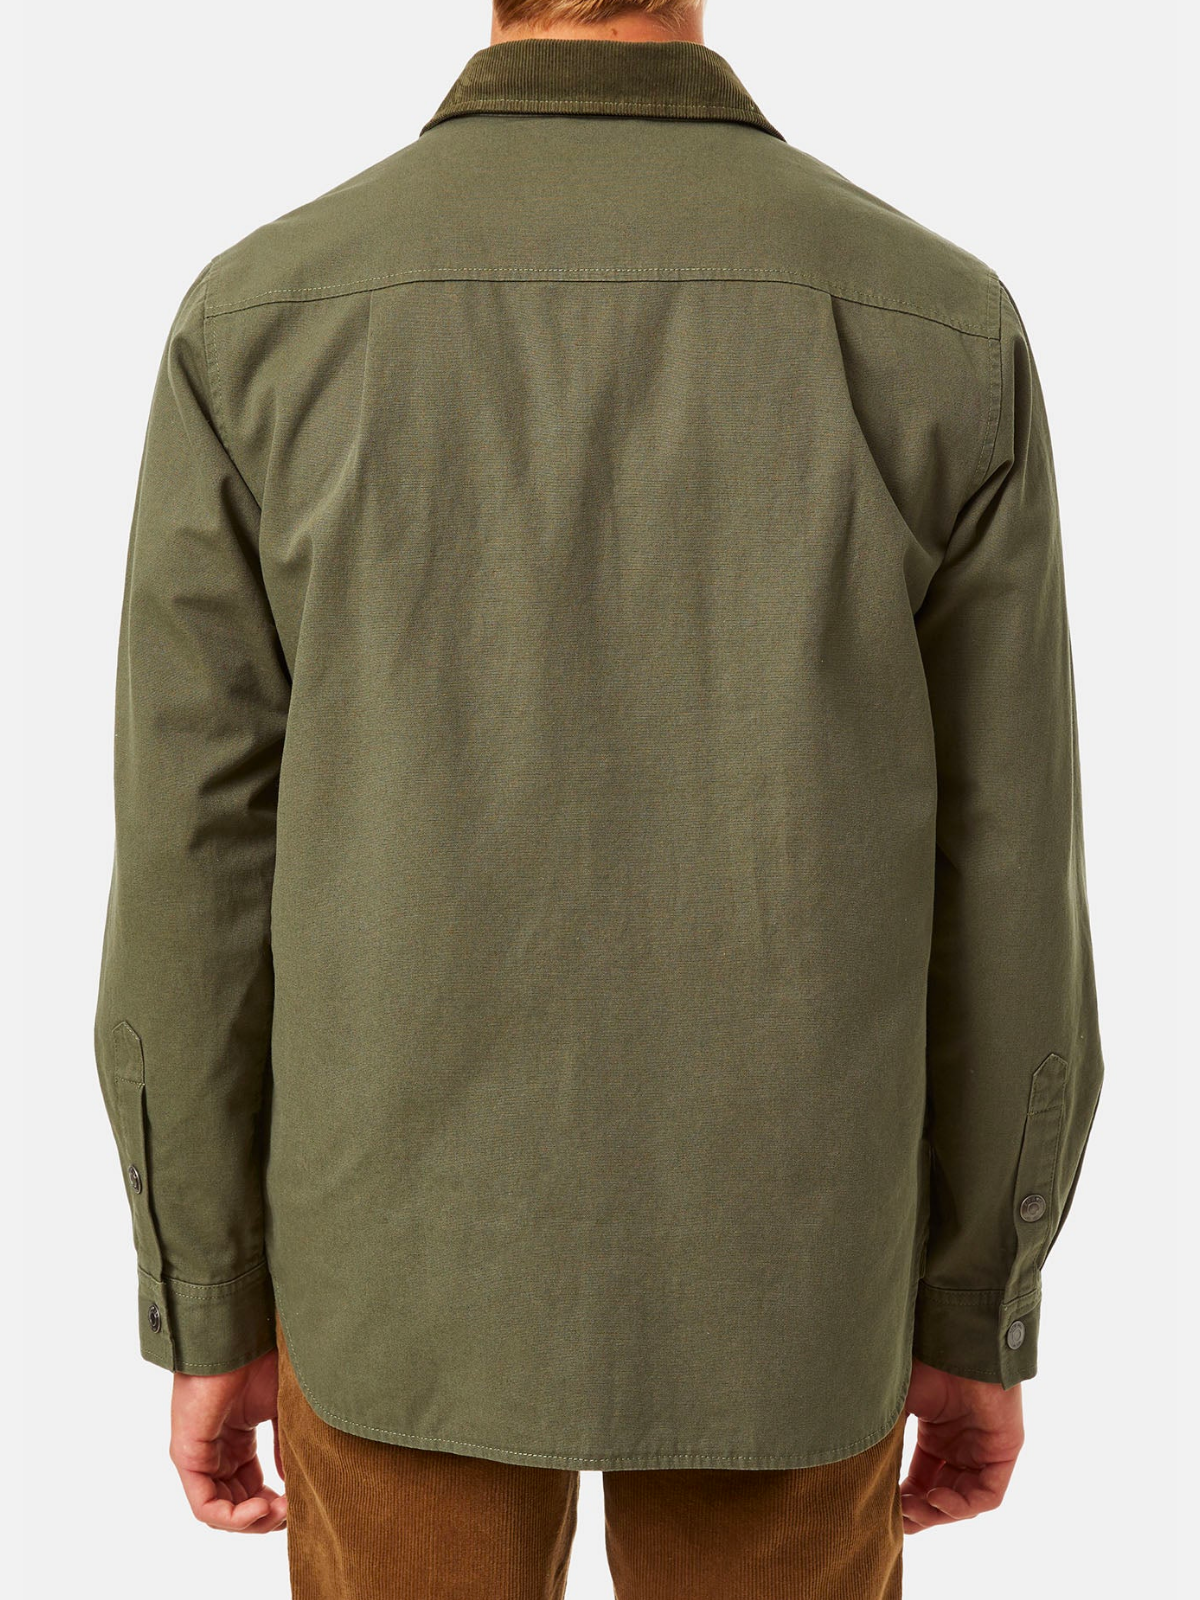 katin campbell jacket olive green cotton cavas corduroy collar kempt athens ga georgia men's clothing store